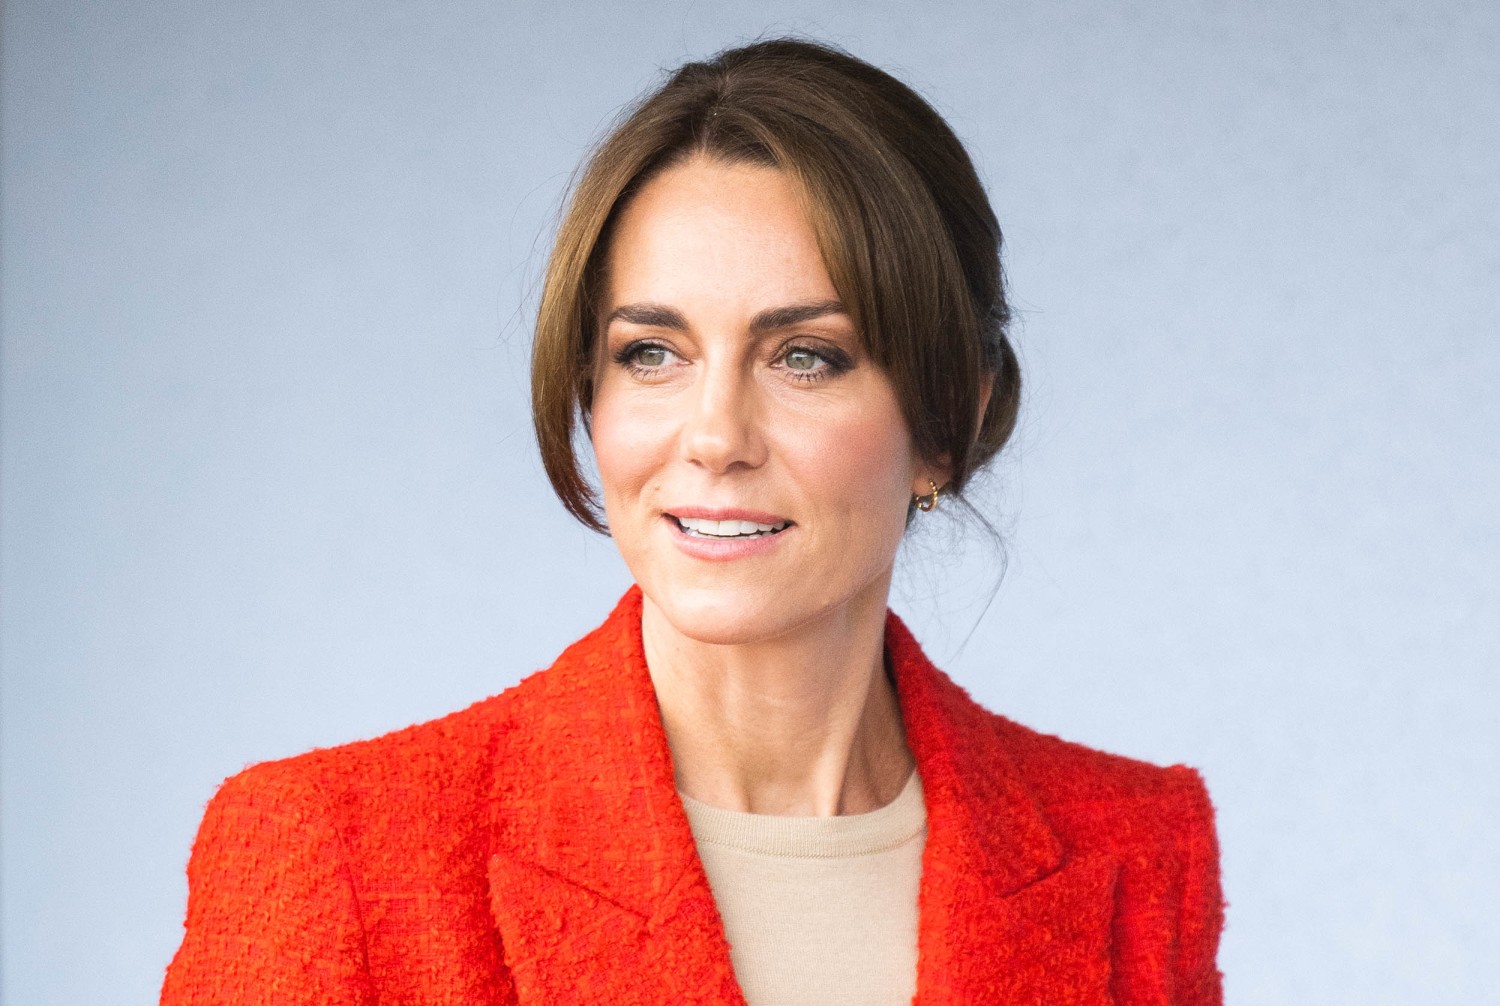 Kate Middleton Undergoing Cancer Treatment, She Says